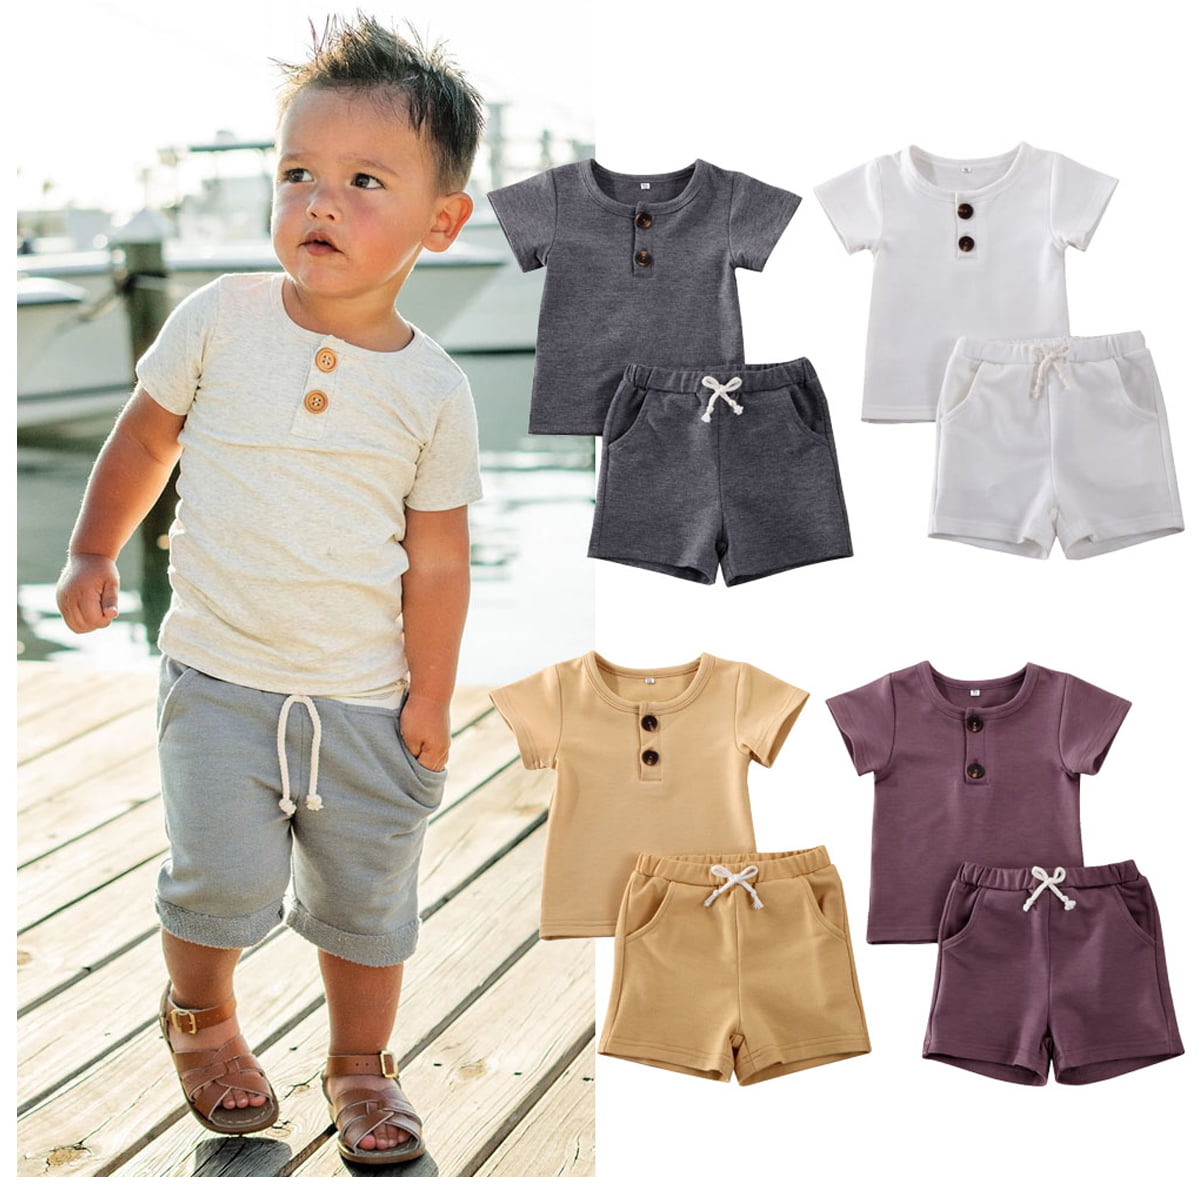 Newborn Infant Baby Boy Short Sleeve T-shirt Tops Short Pants Shorts Outfit Set 